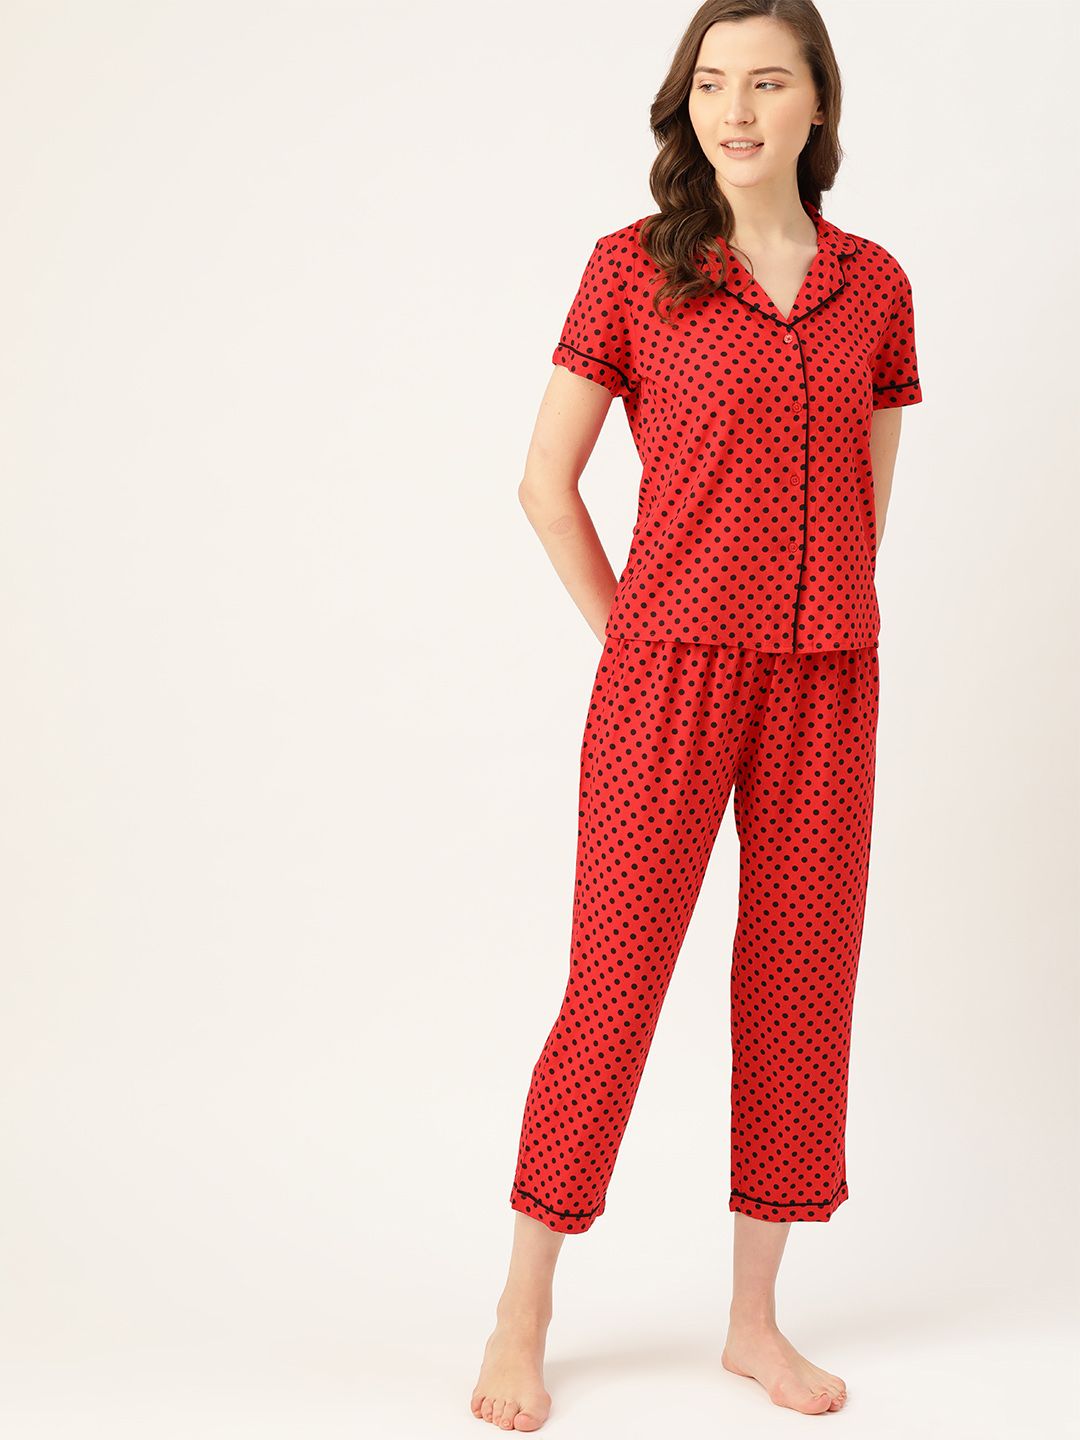 ETC Women Red & Black Polka Dot Printed Night Suit Price in India